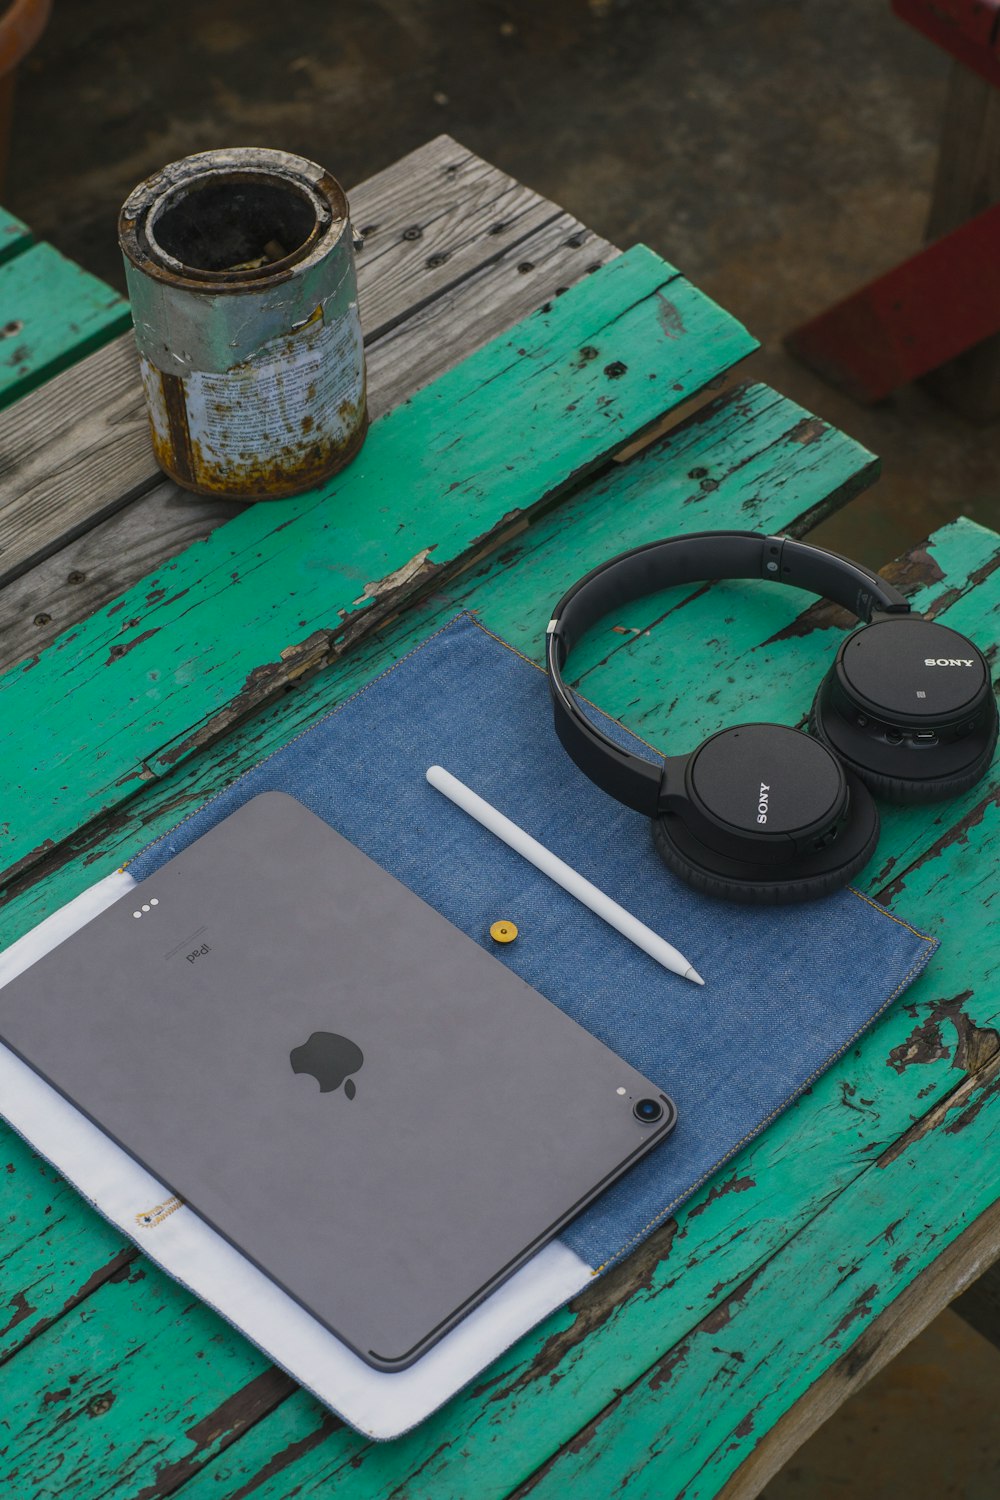 black cordless headphones beside iPad on green table